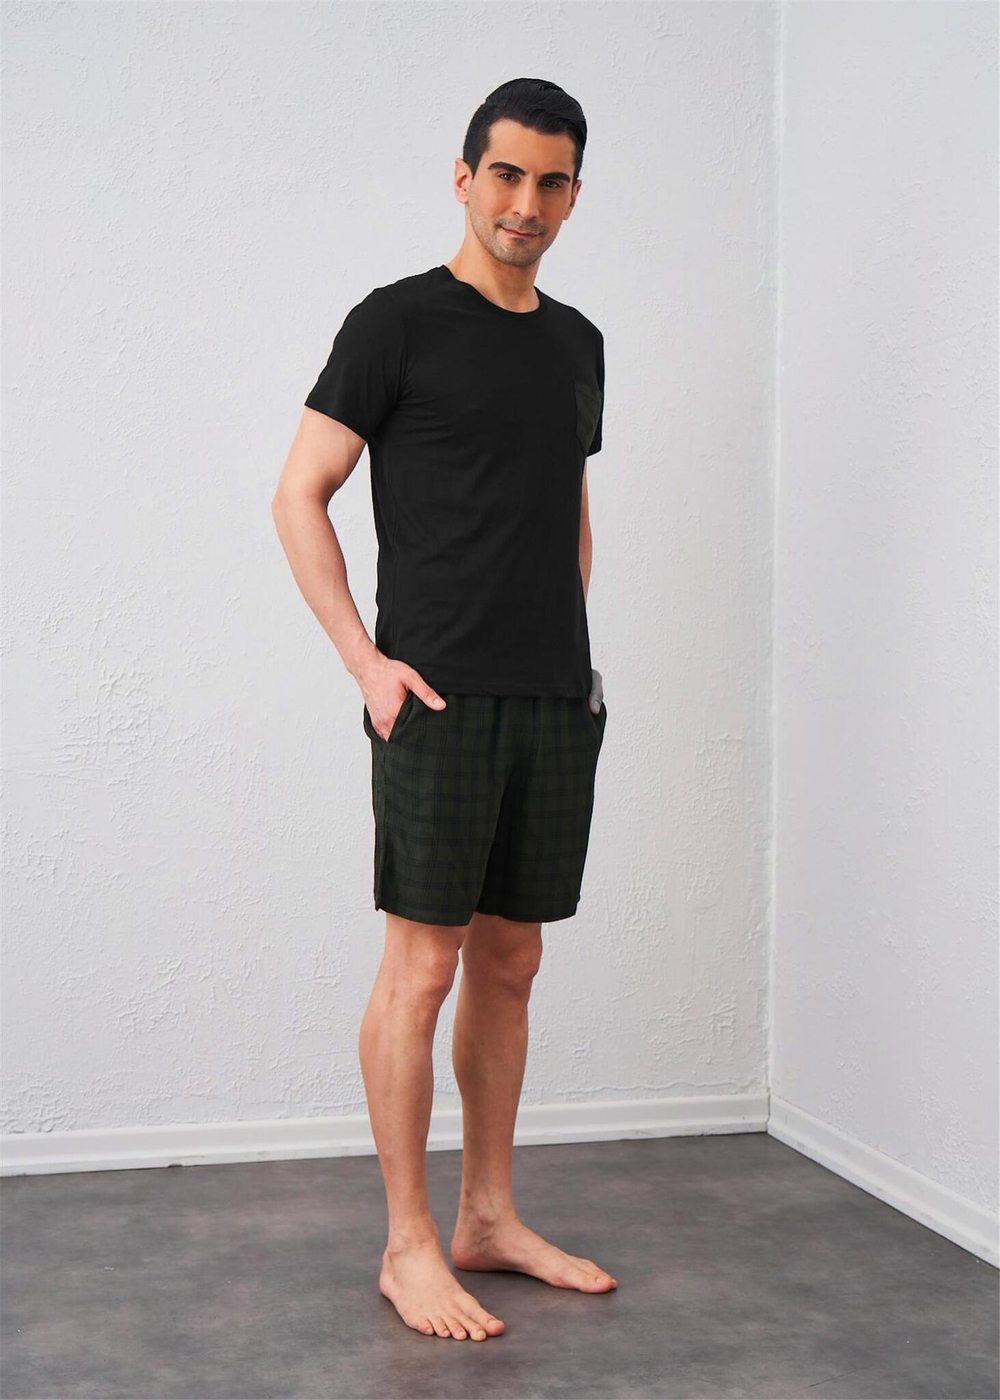 RELAX MODE - Мужская пижама с шортами - 13226